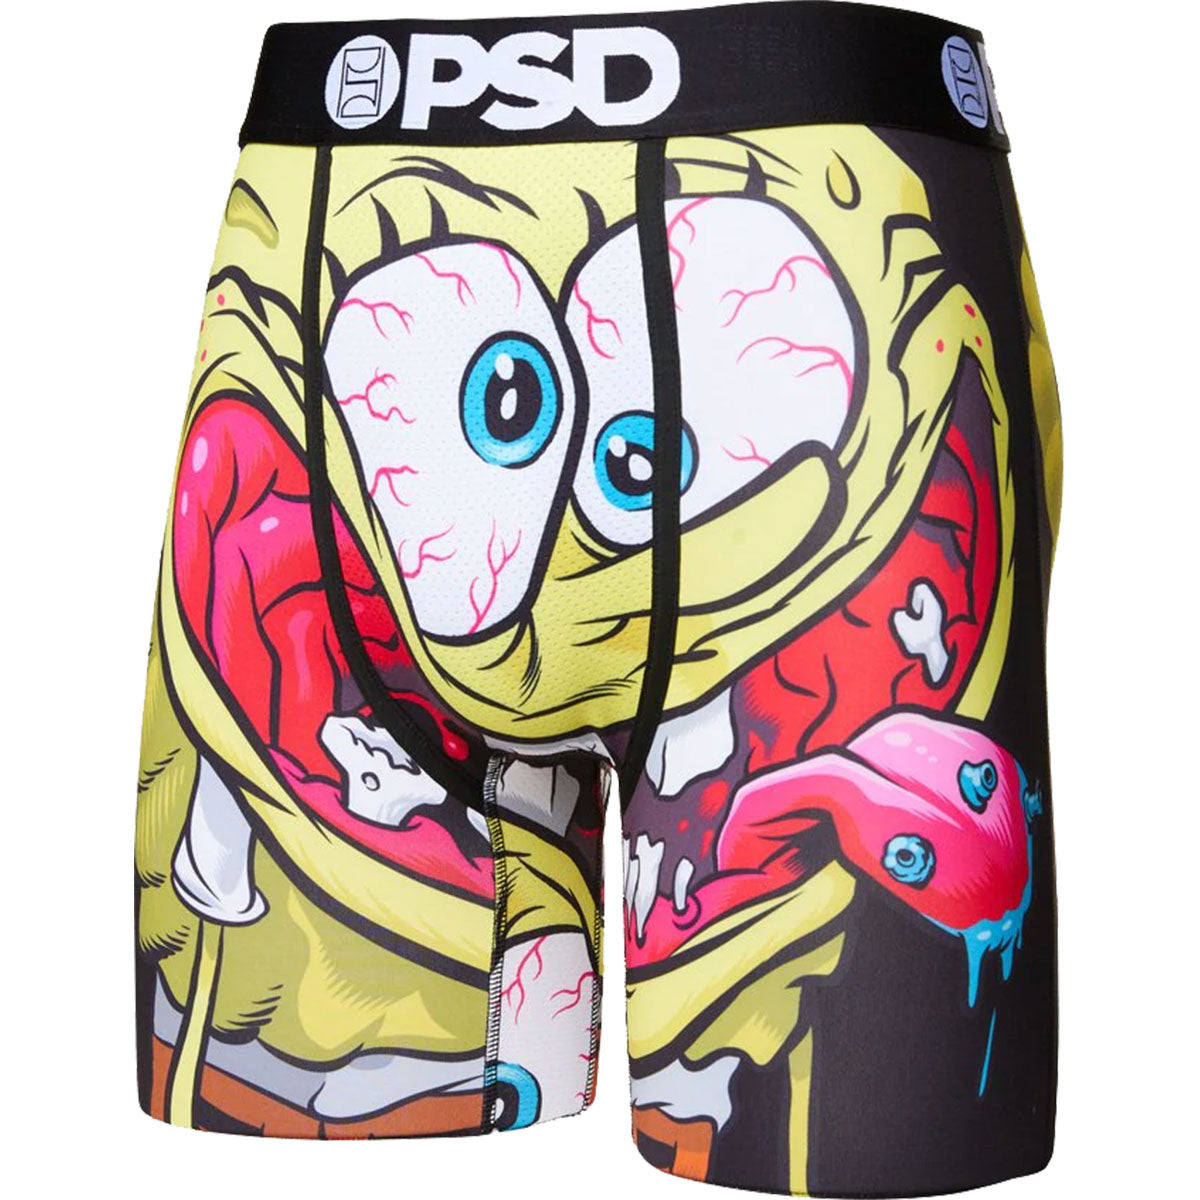 PSD Spongebob Krusty Pants Boxer Men's Bottom Underwear (Refurbished, –